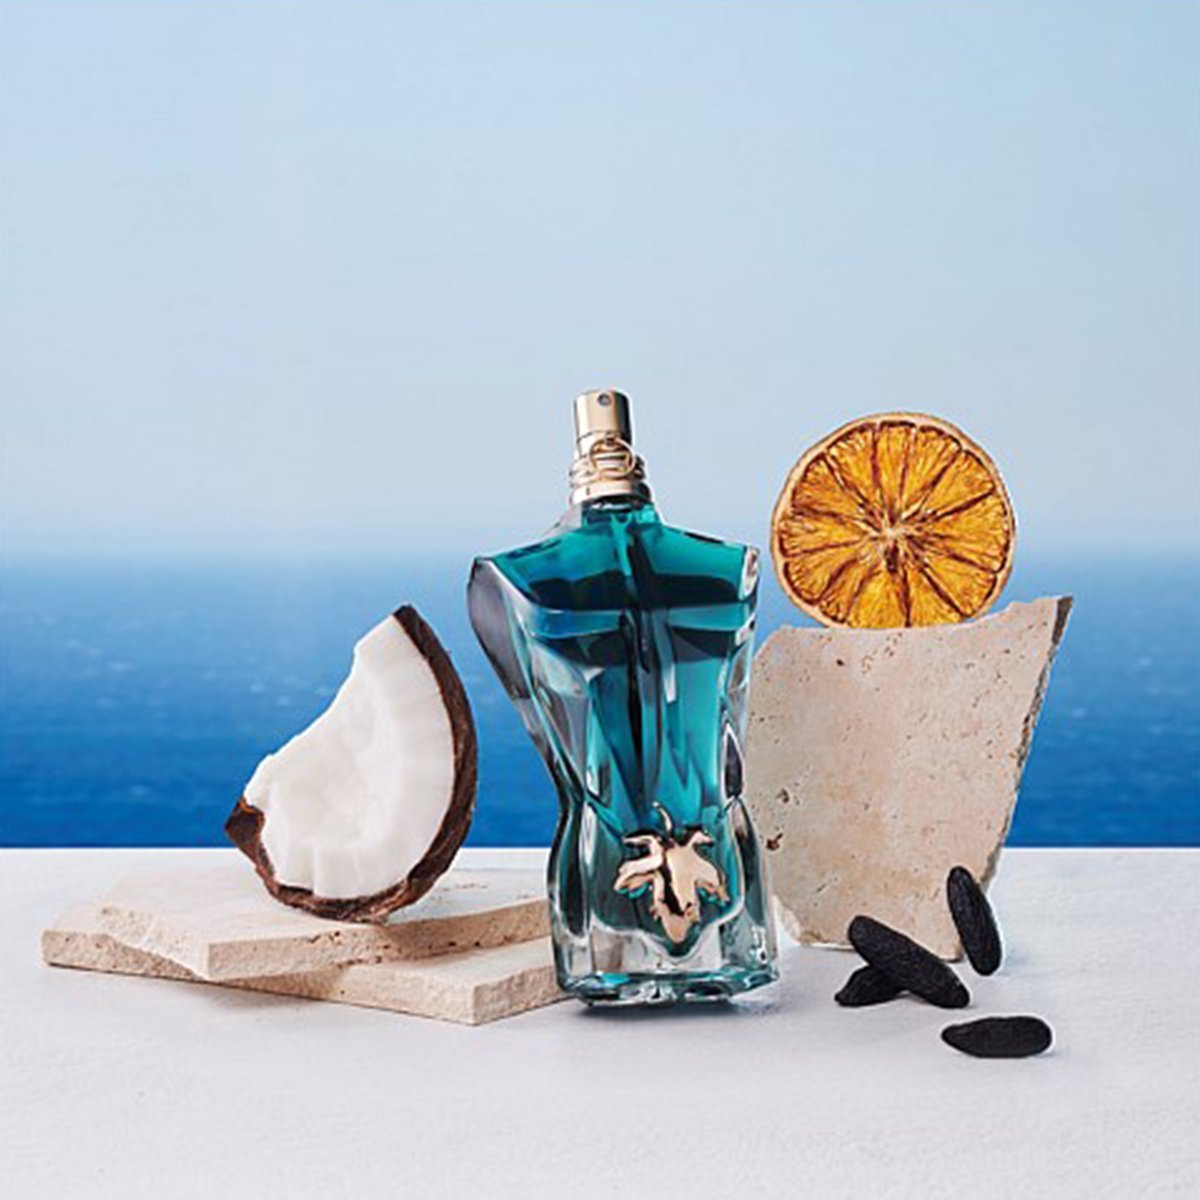 Jean Paul Gaultier Le Beau Travel Gift Set - My Perfume Shop Australia